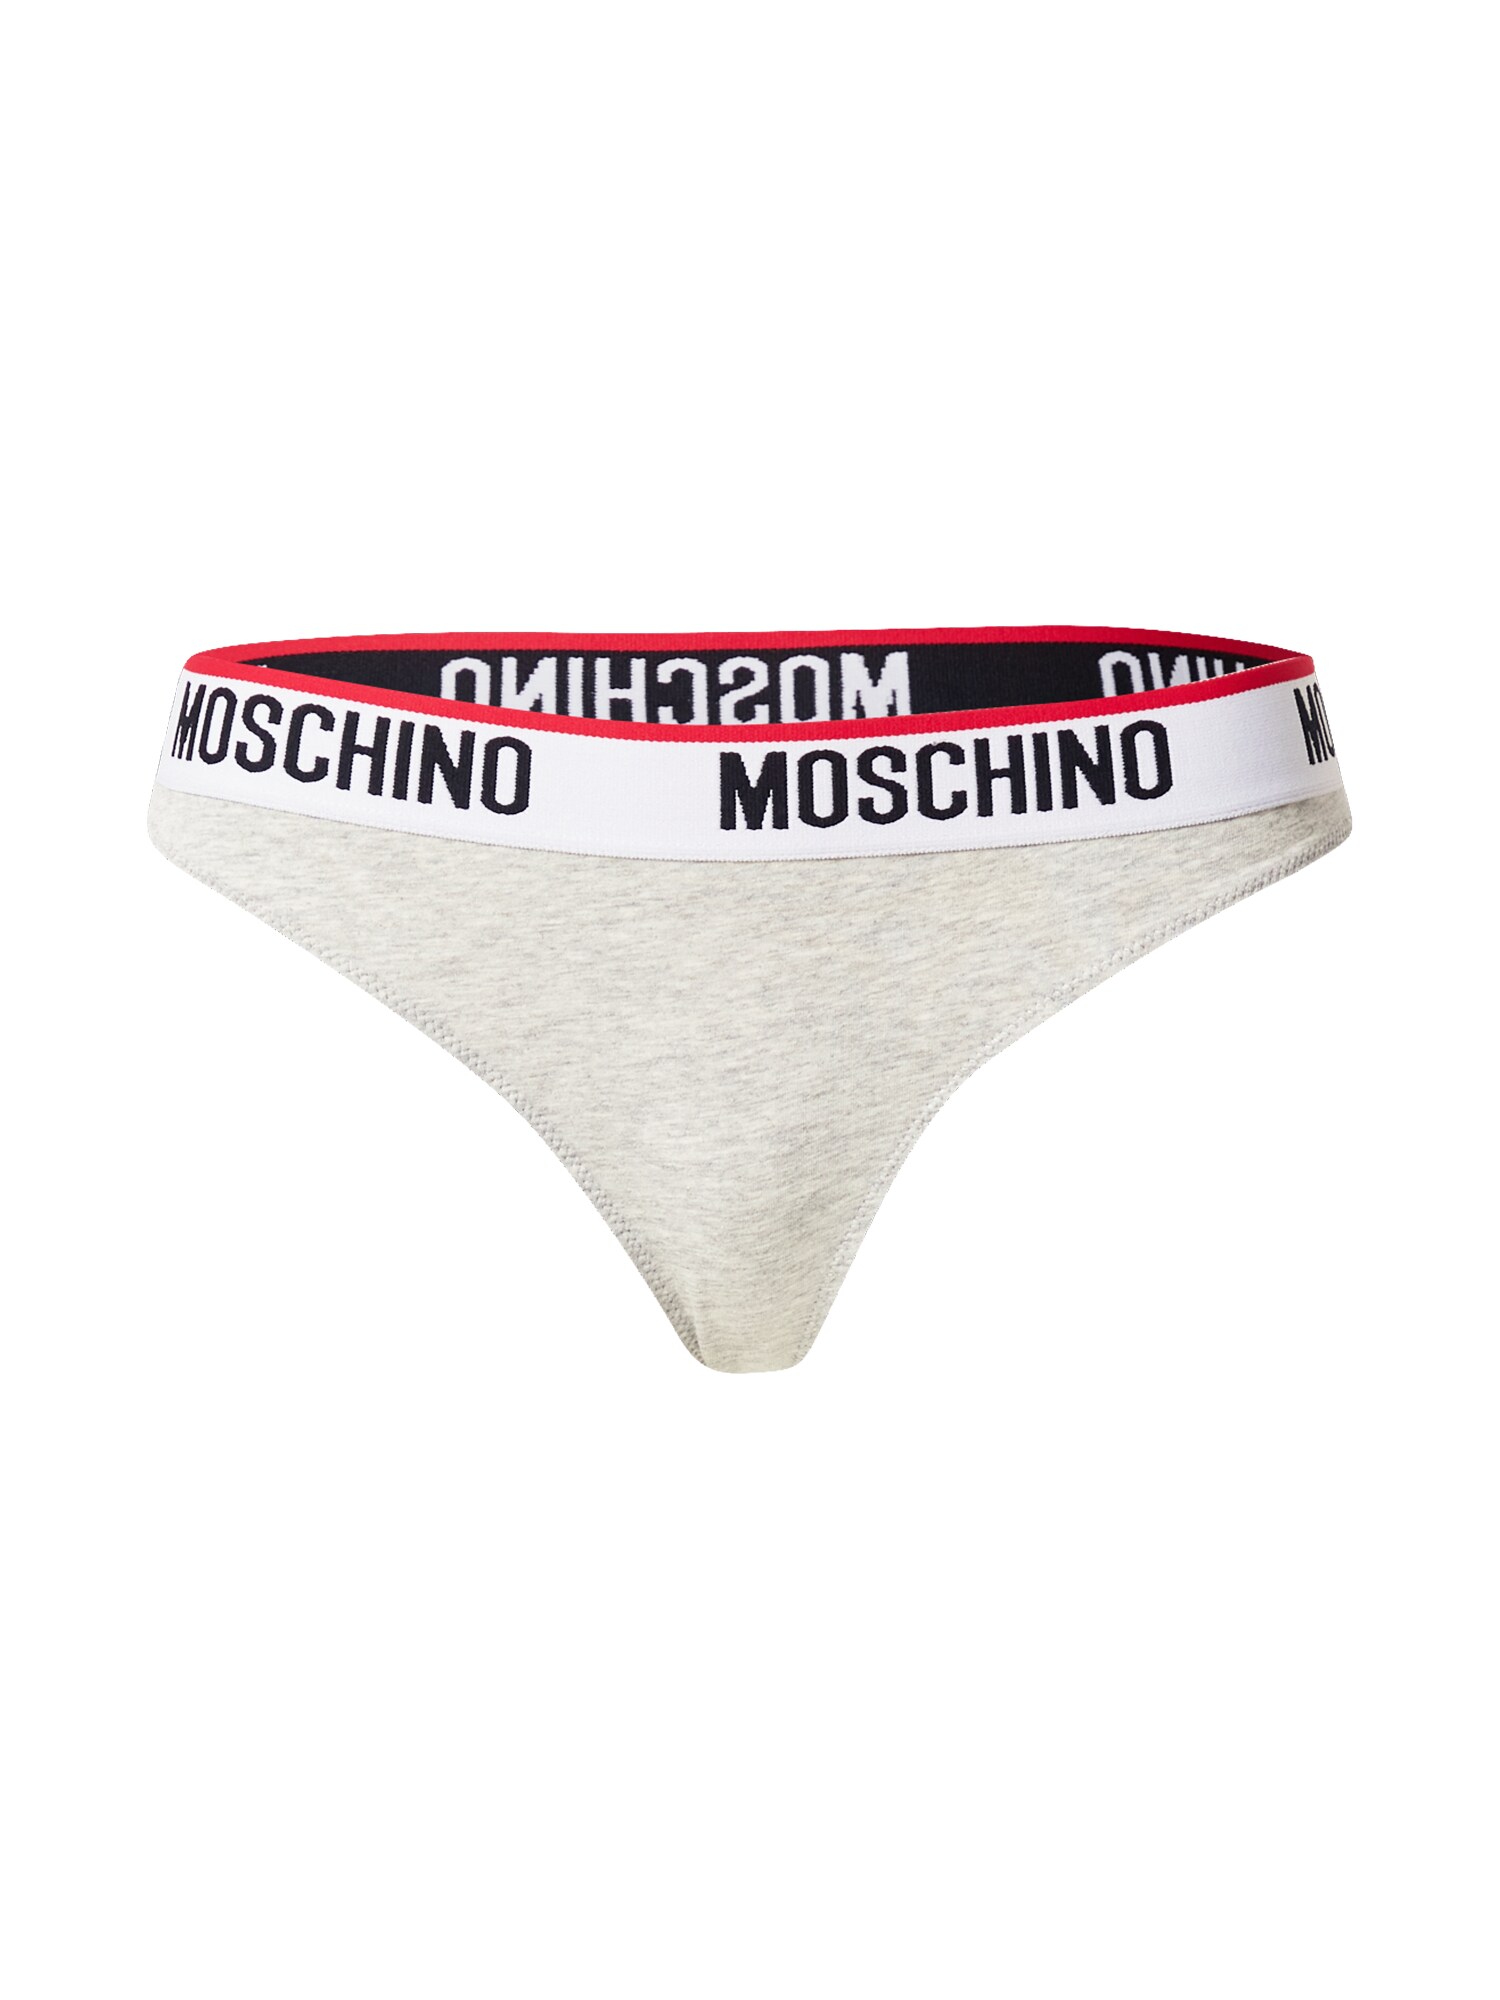 Moschino Underwear Siaurikės pilka / raudona / balta